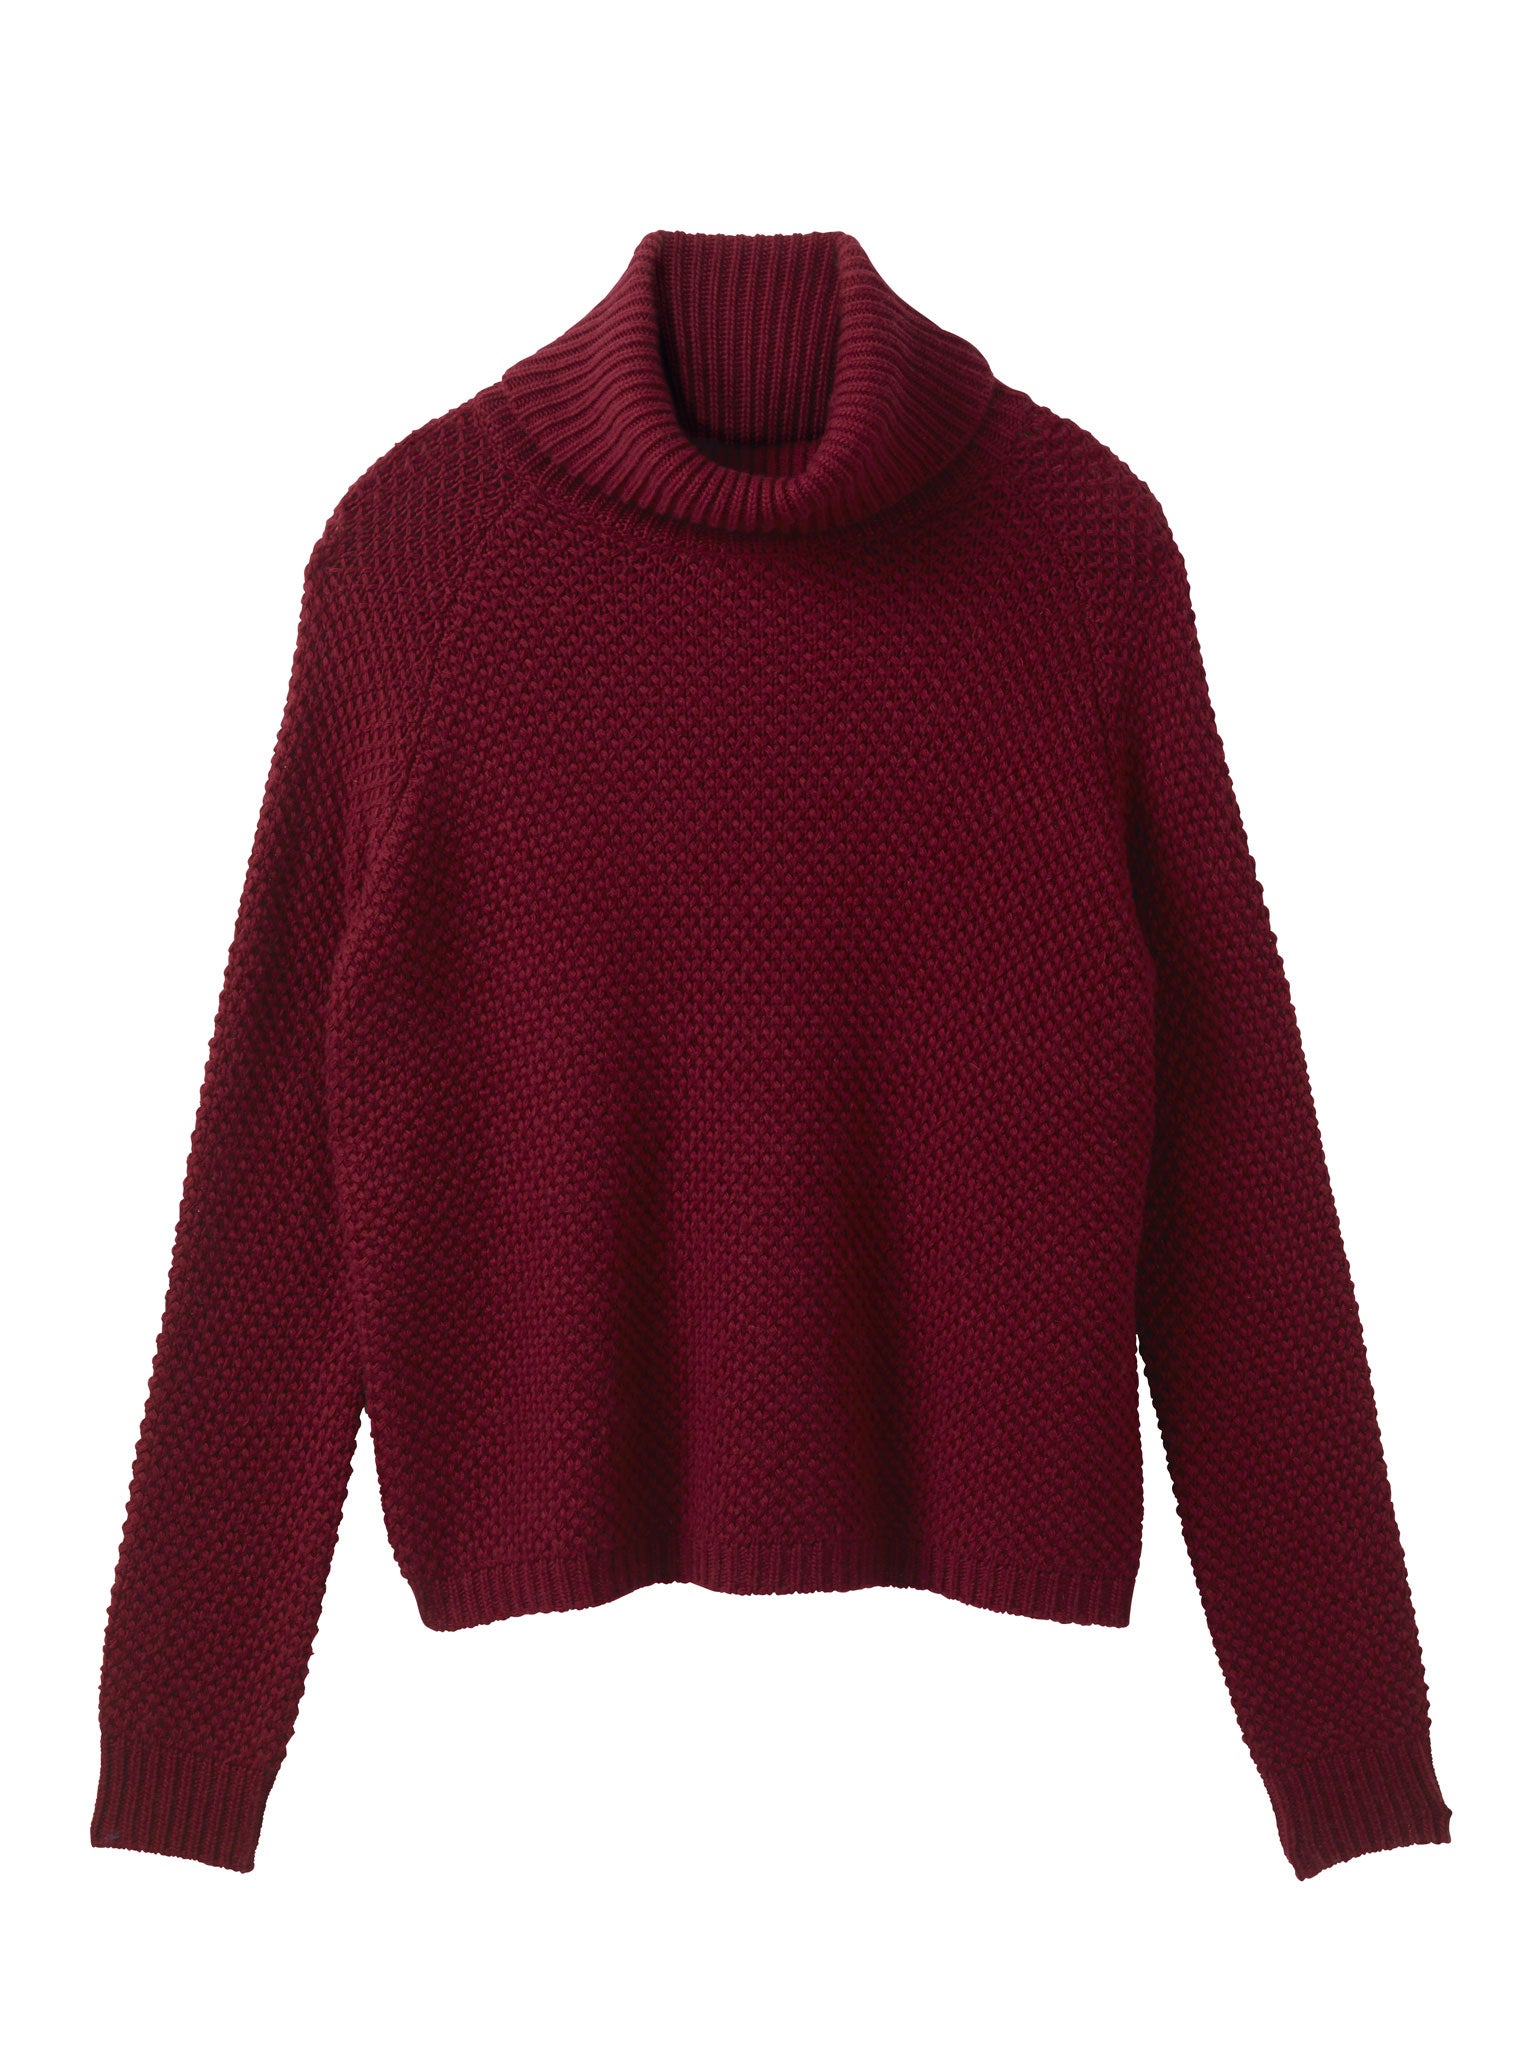 Heart-stitch sweater from Hush, £85, hush-uk.com